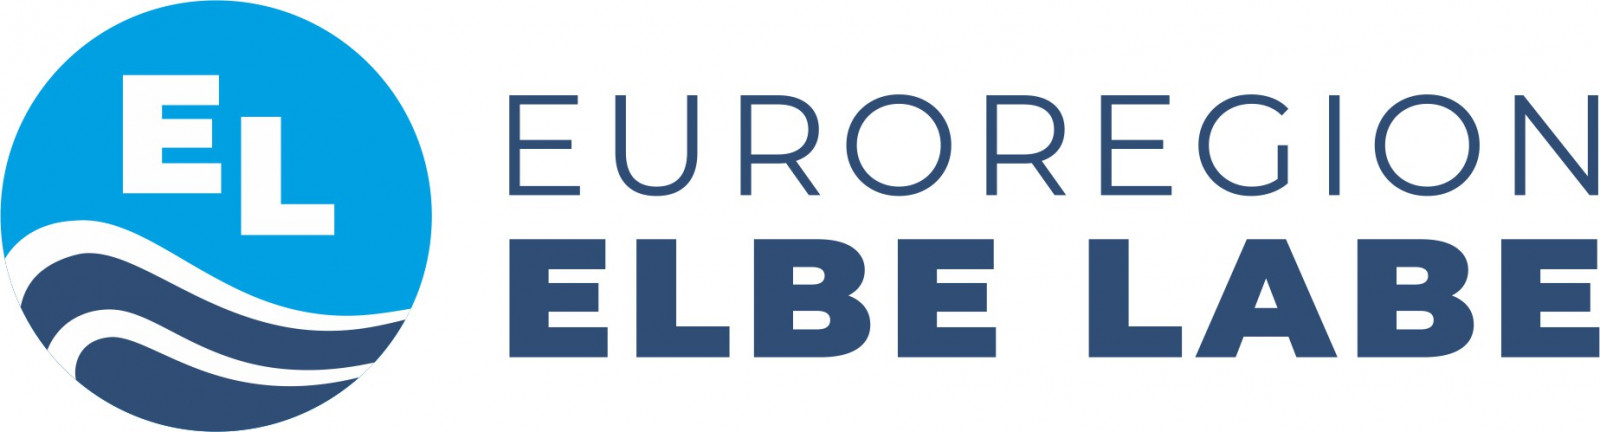 Euroregion Elbe/Labe Logo